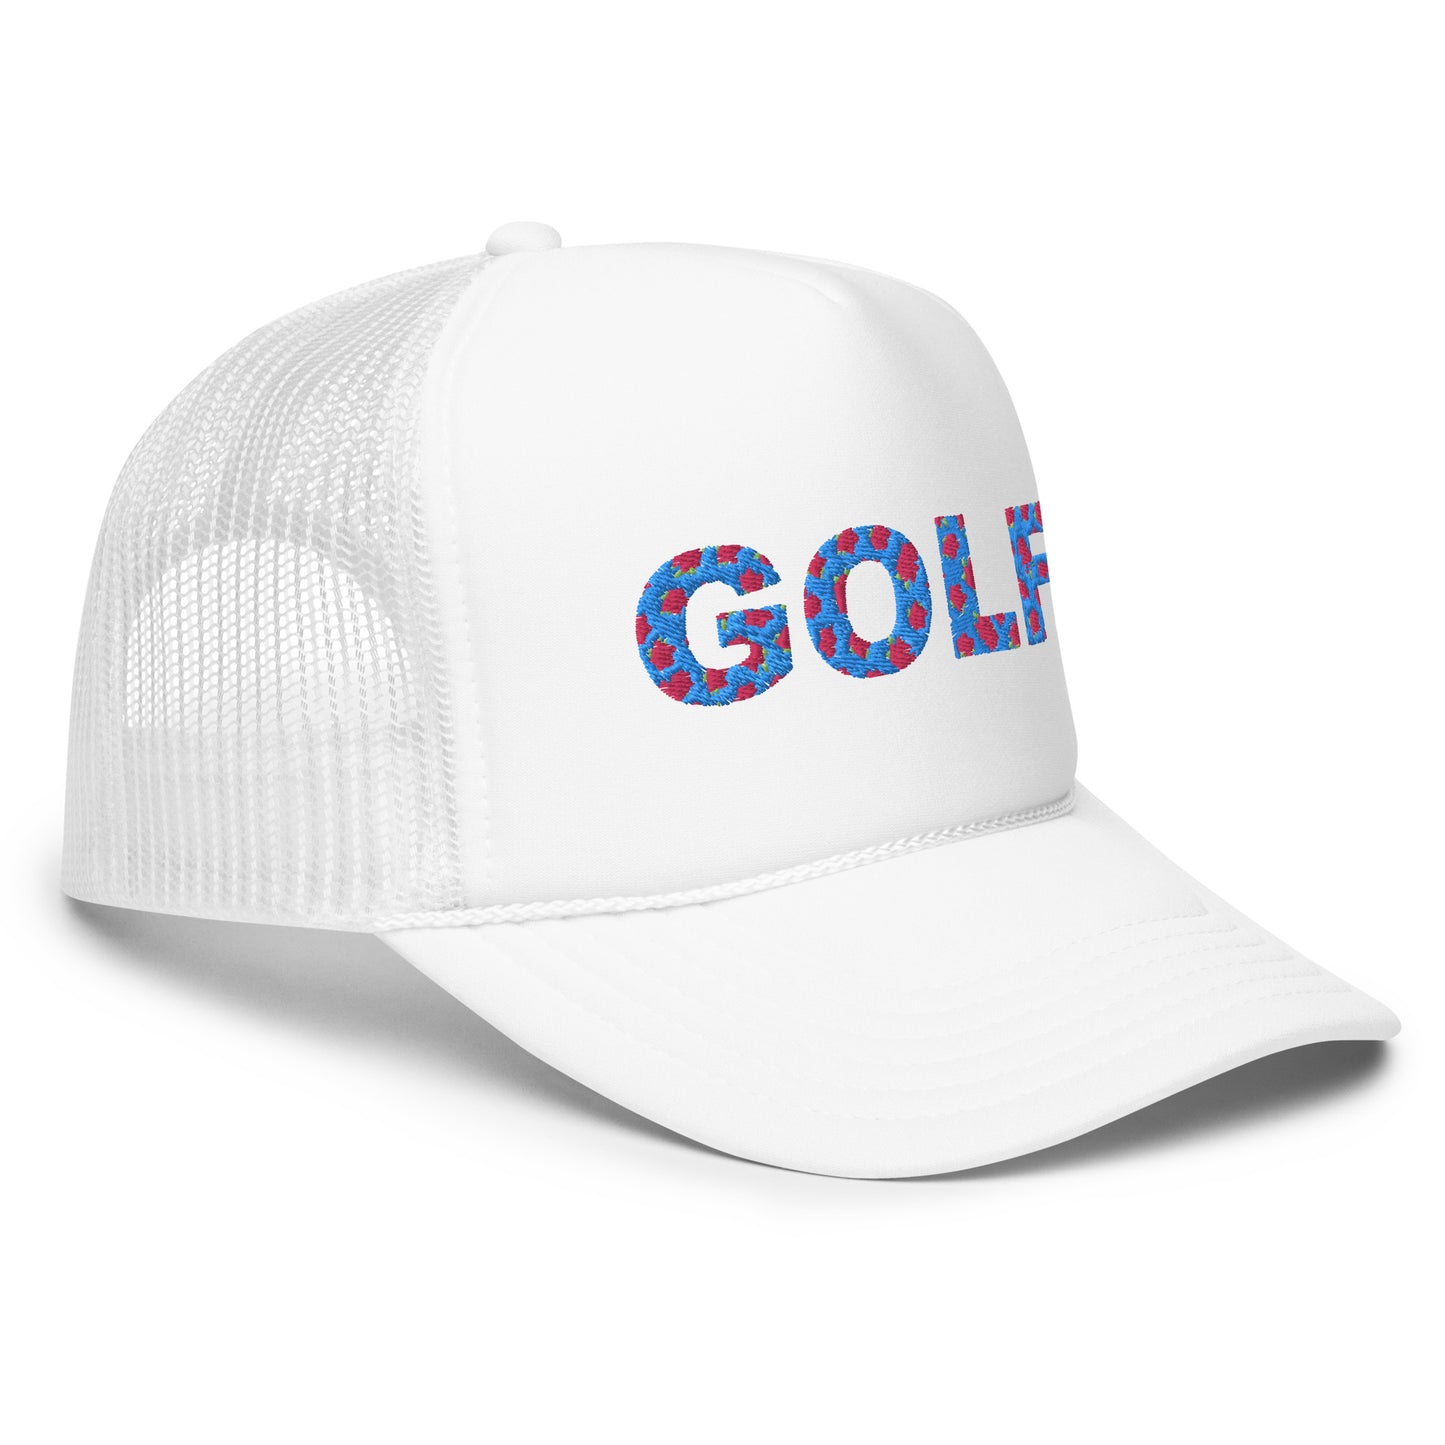 GOLF Retro Trucker Hat